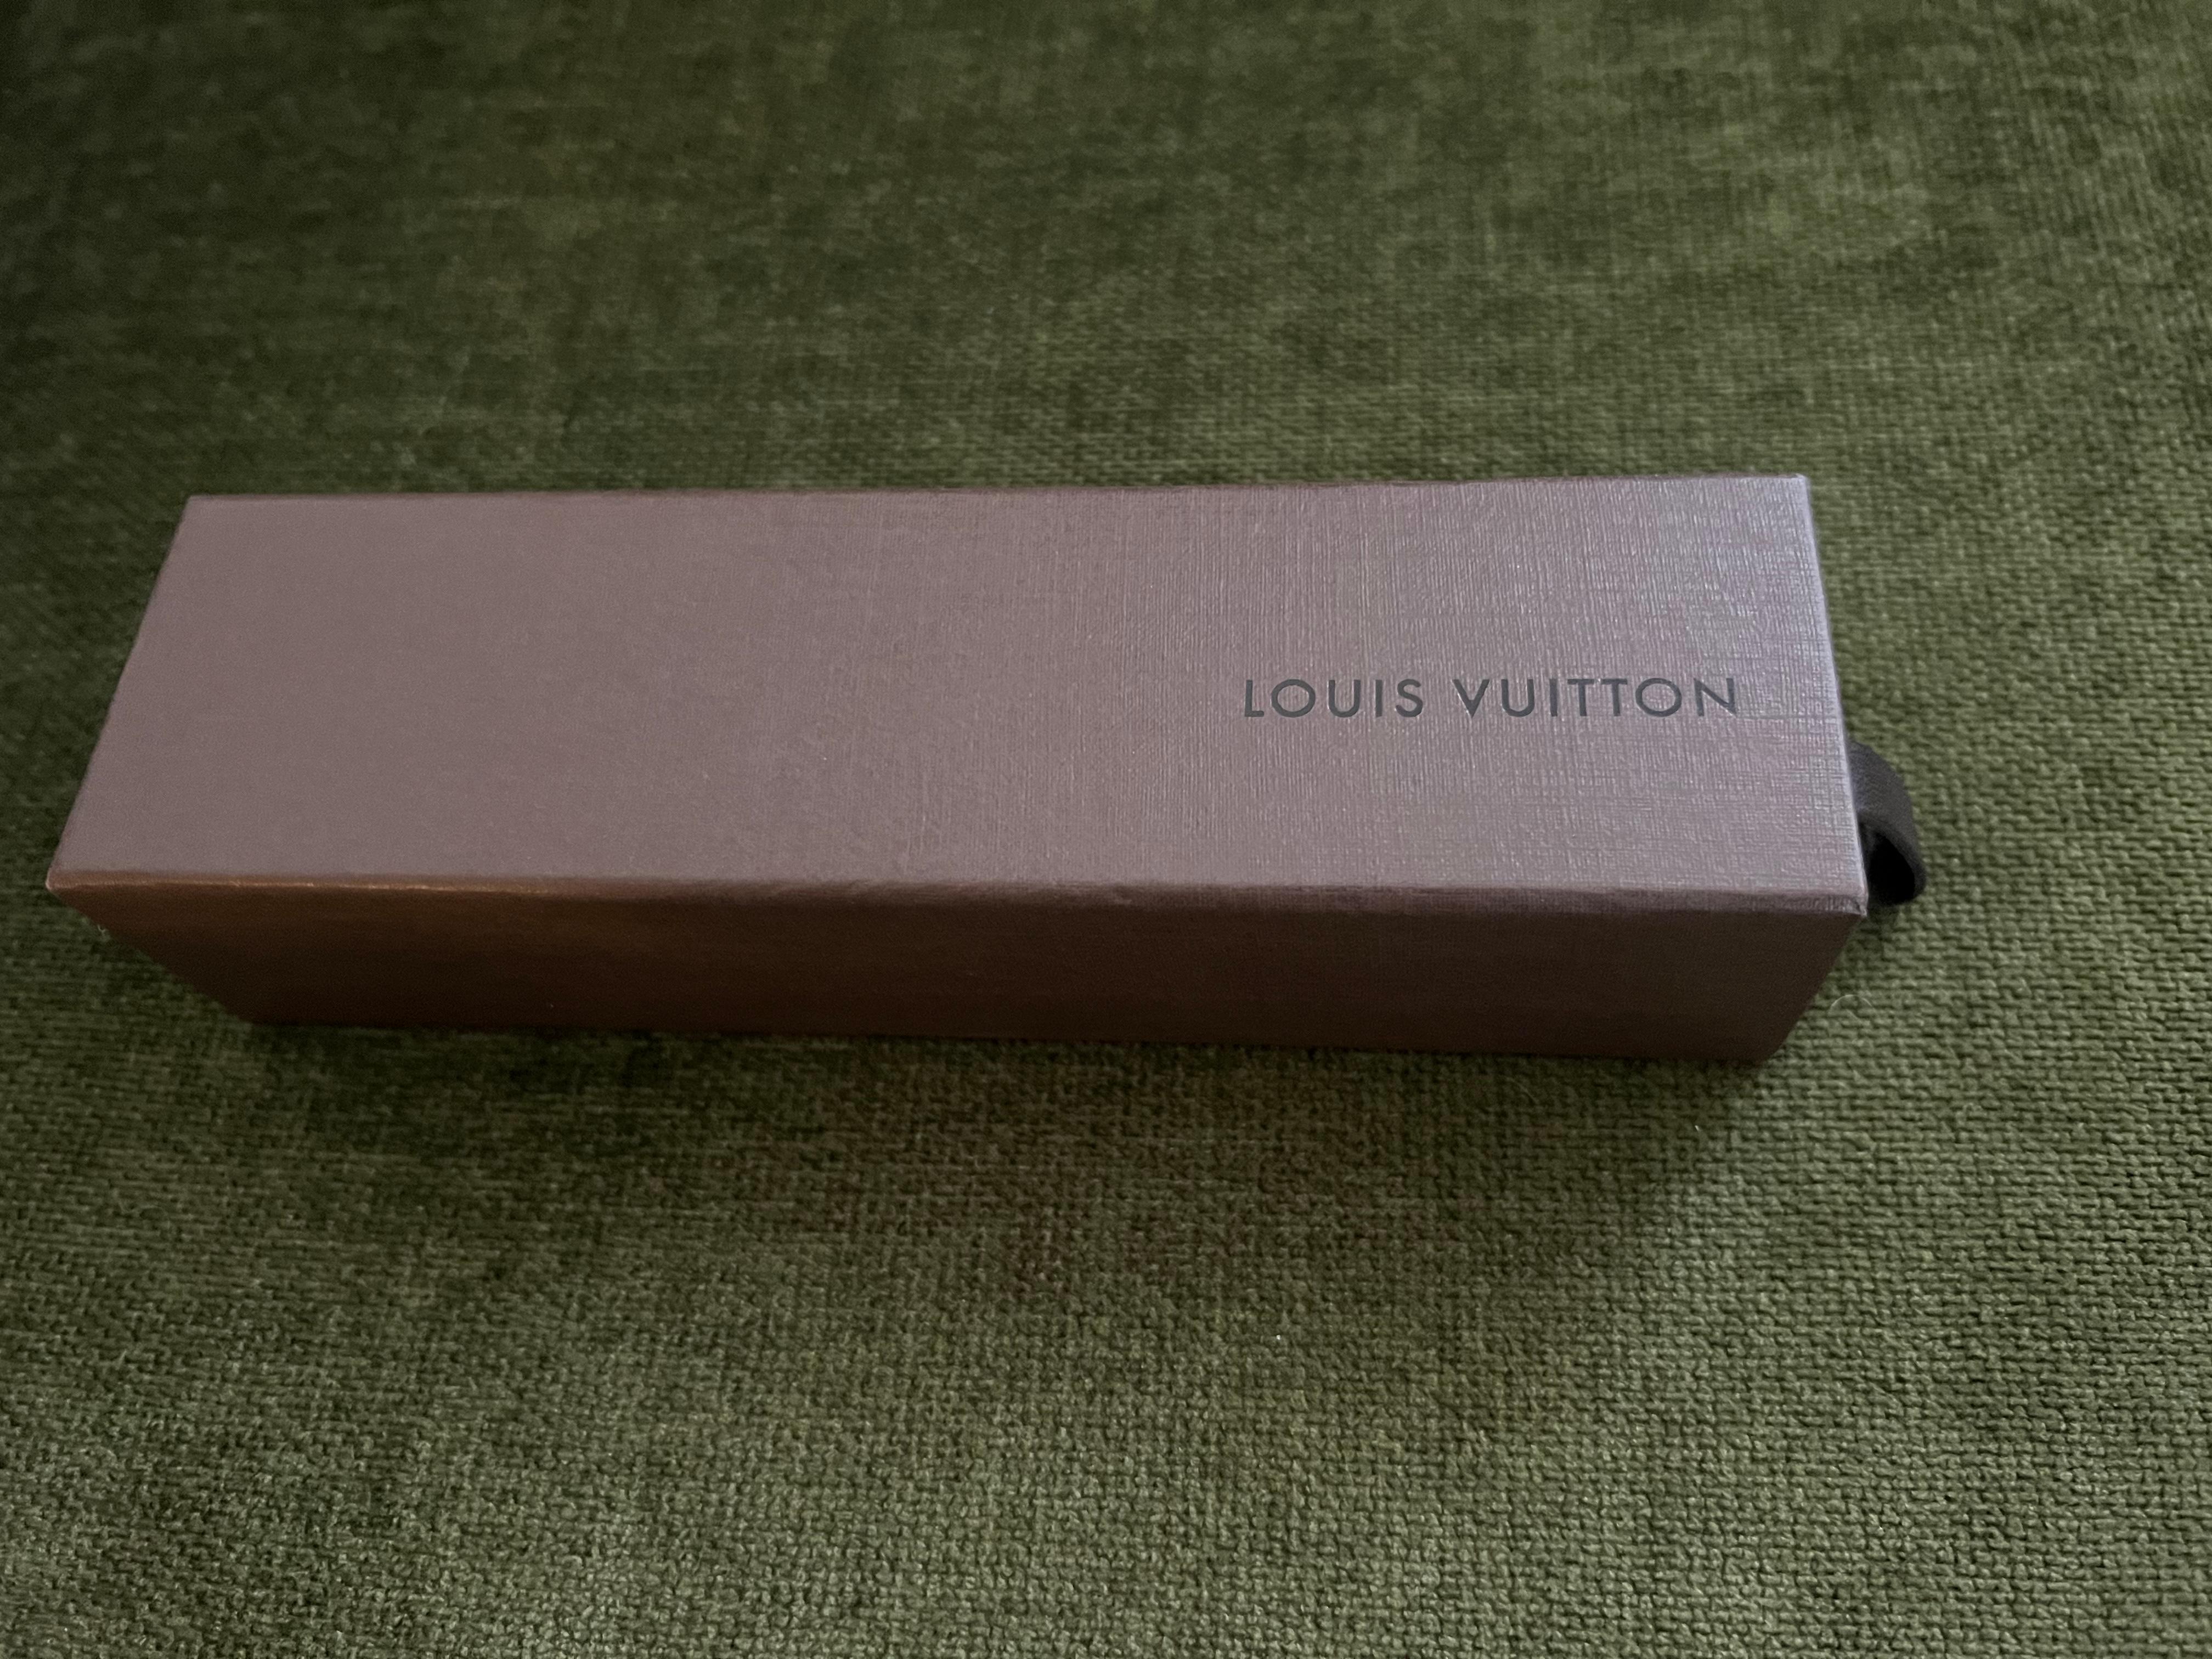 Louis Vuitton Orange and Gold Agenda chic pen   5